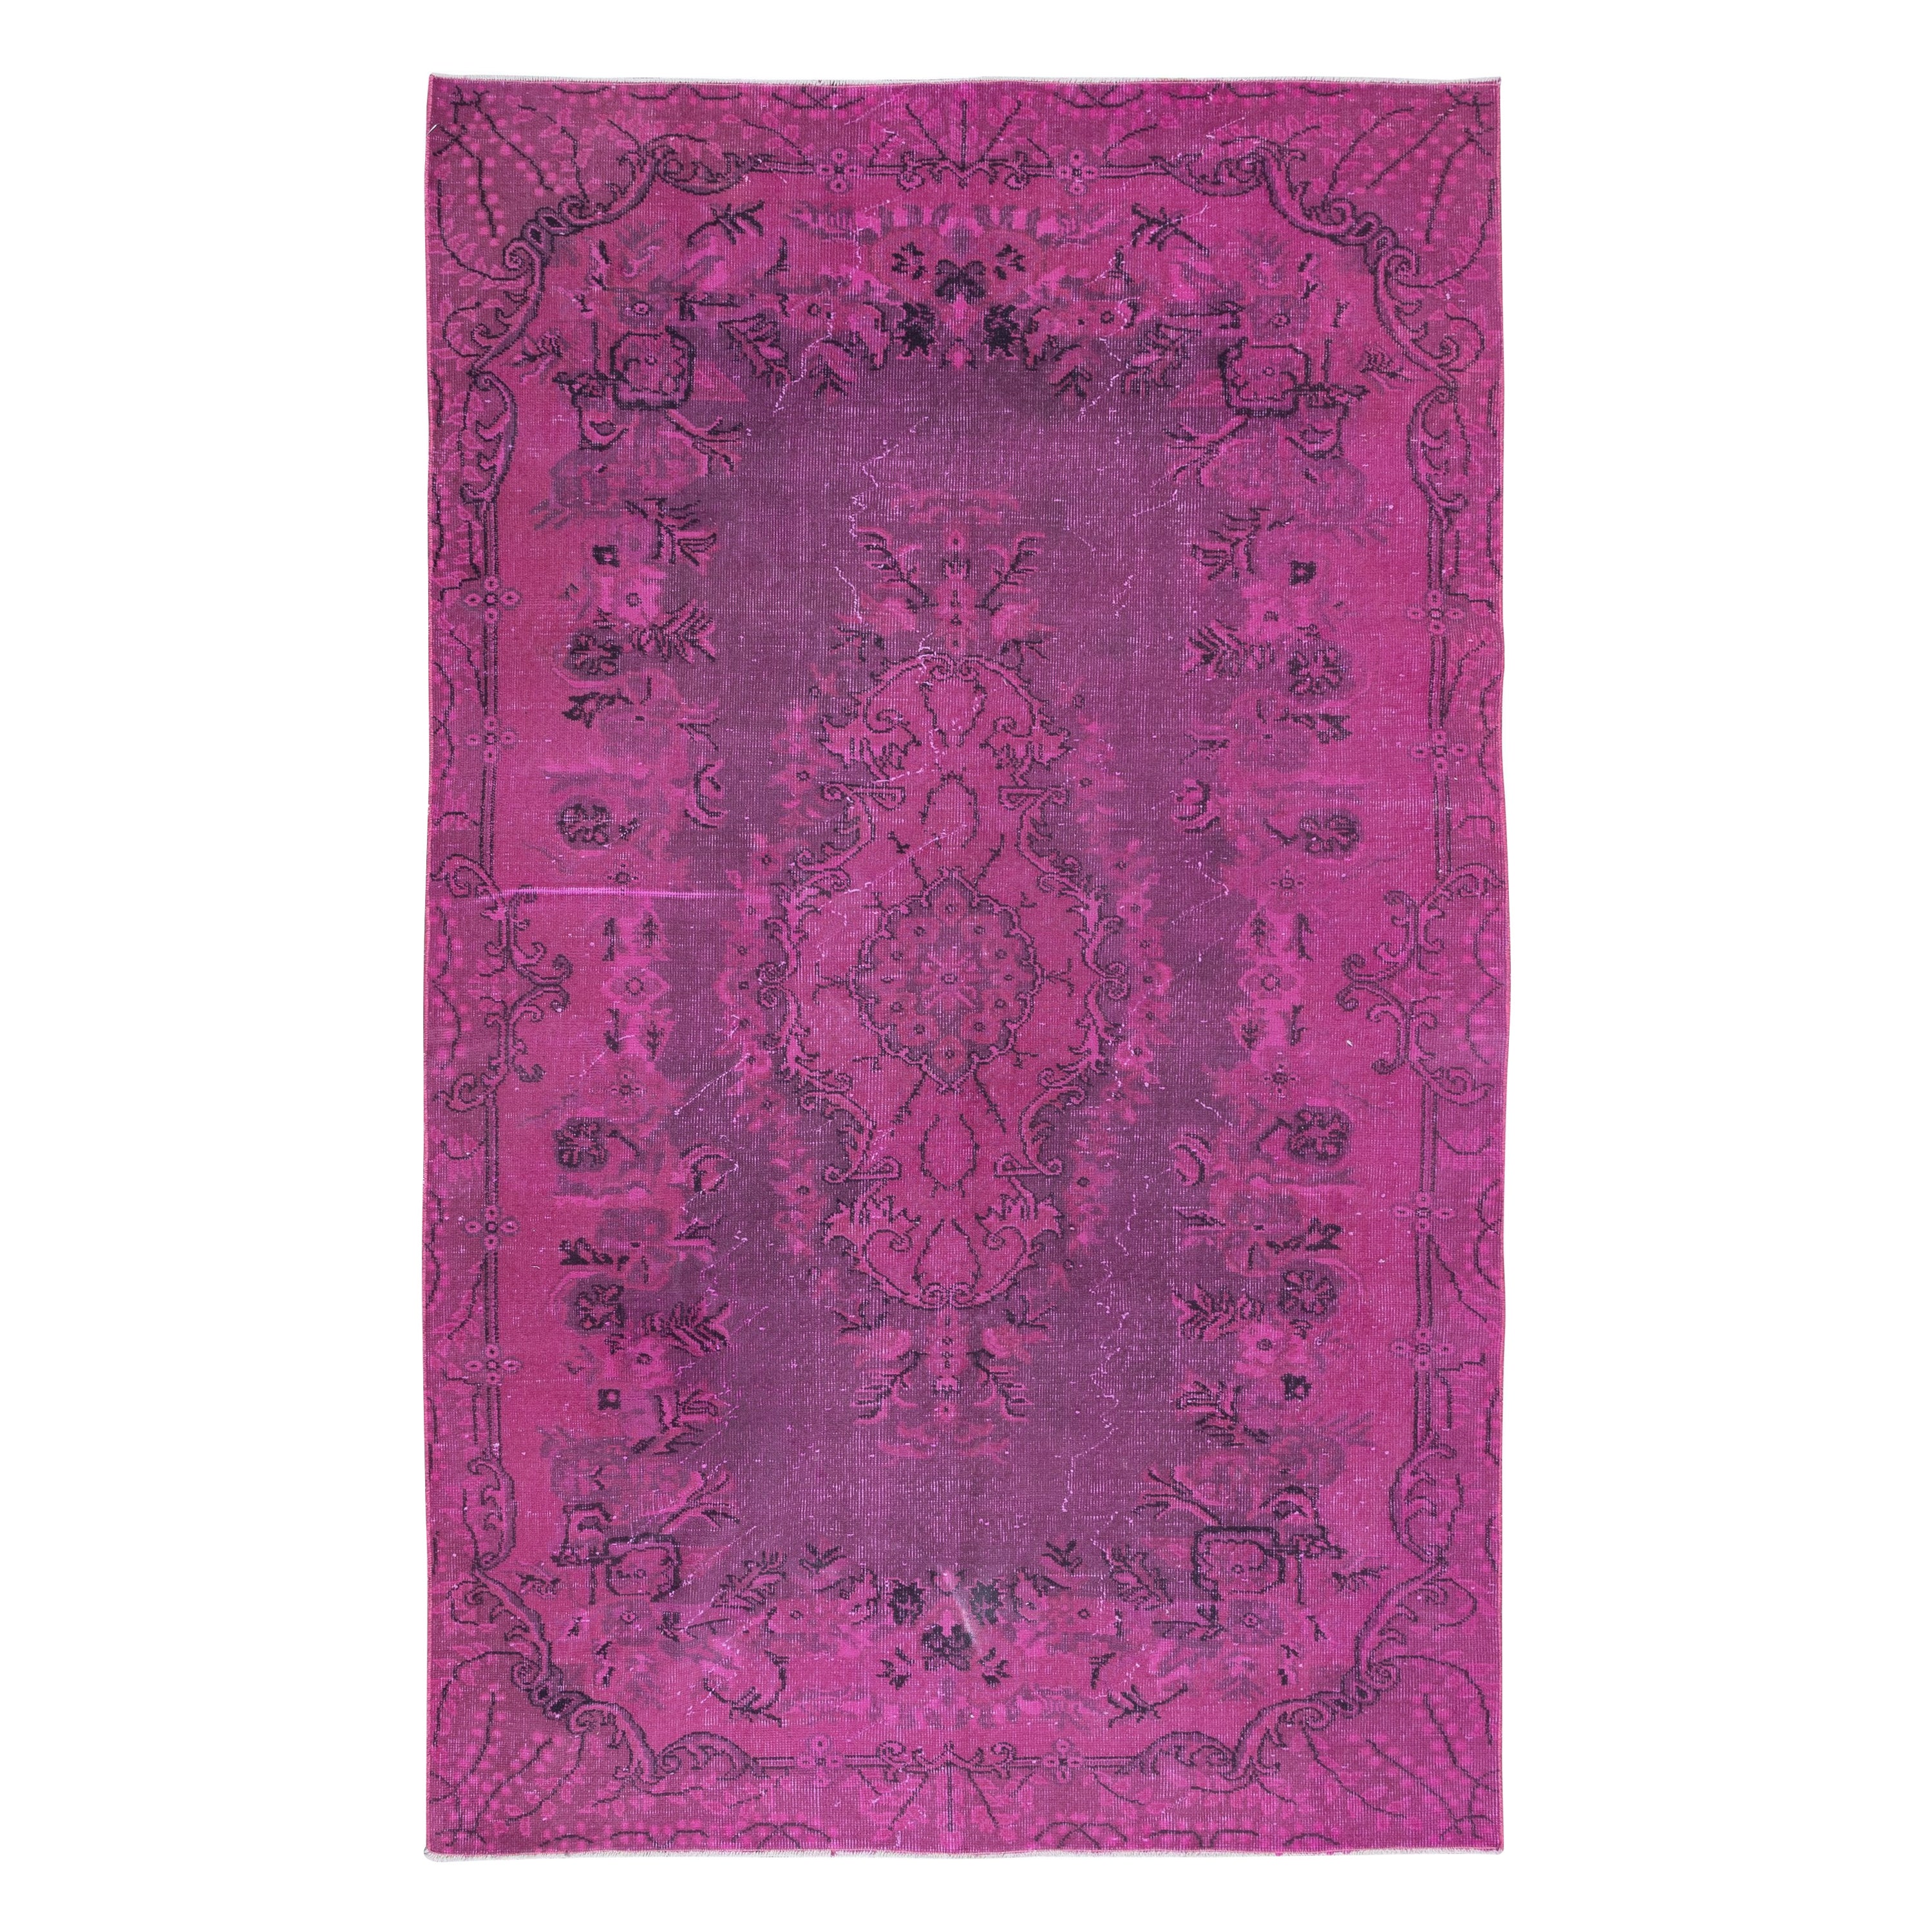 5.4x8.7 Ft Pink Handmade Modern Rug, Turkish Living Room Carpet with Medallion (tapis de salon turc avec médaillon) en vente